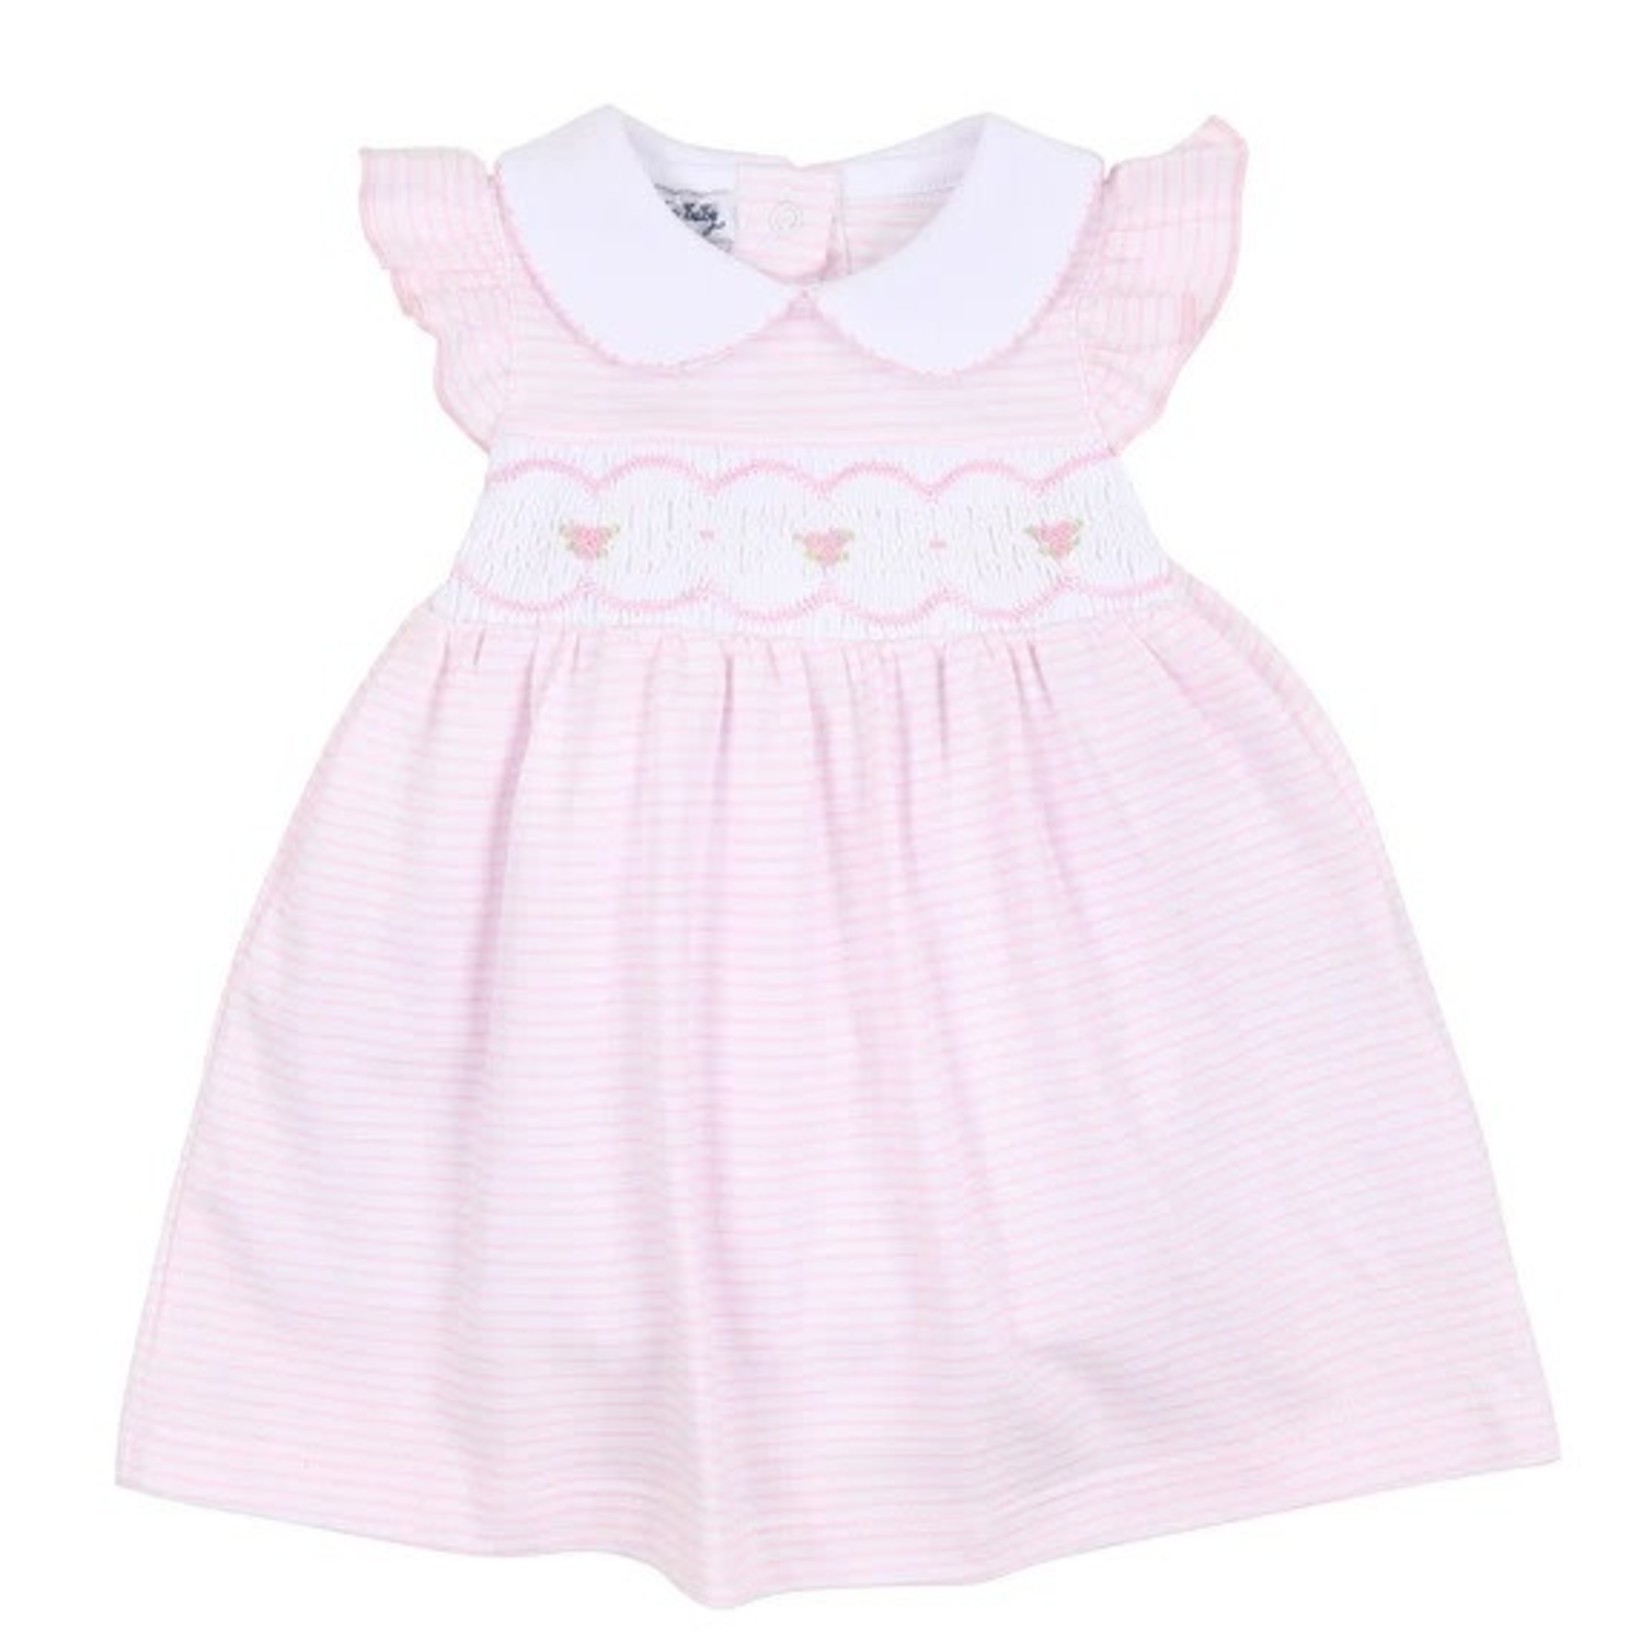 Magnolia Baby Pink Smocked Dress Set